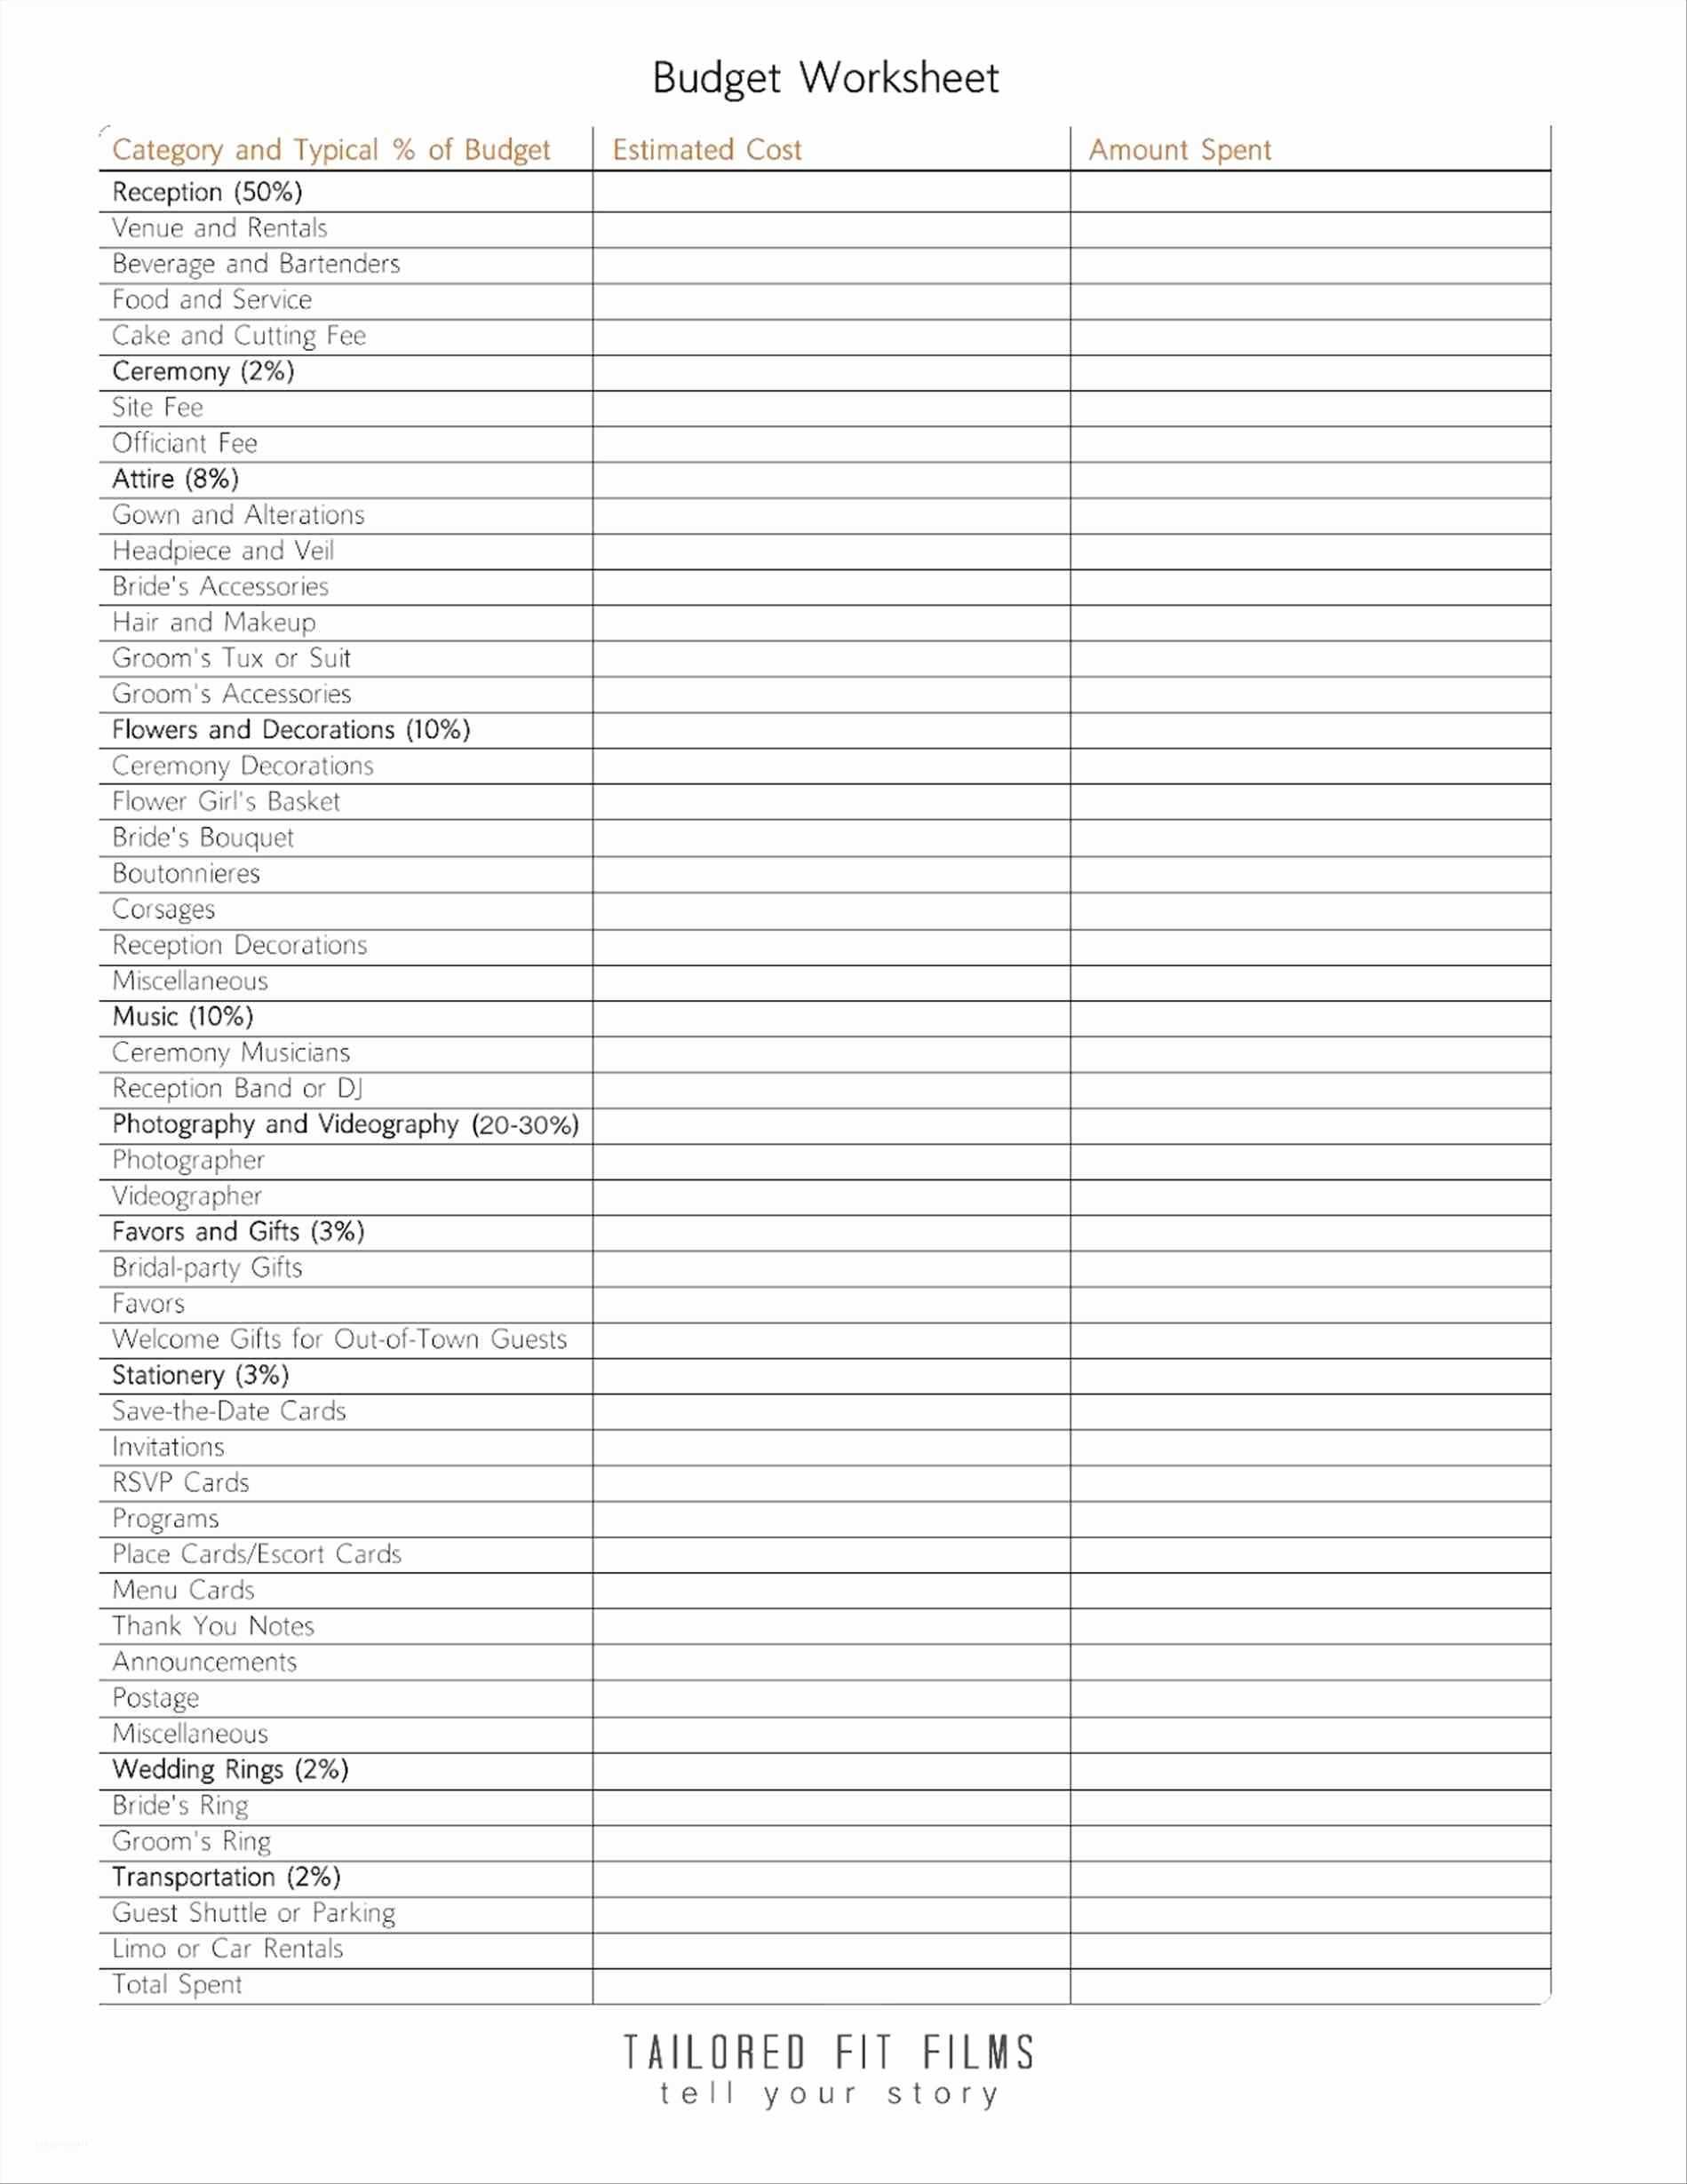 Monthly Budget Worksheet Pdf together with Printable Wedding Bud Spreadsheet Awesome Worksheet Free